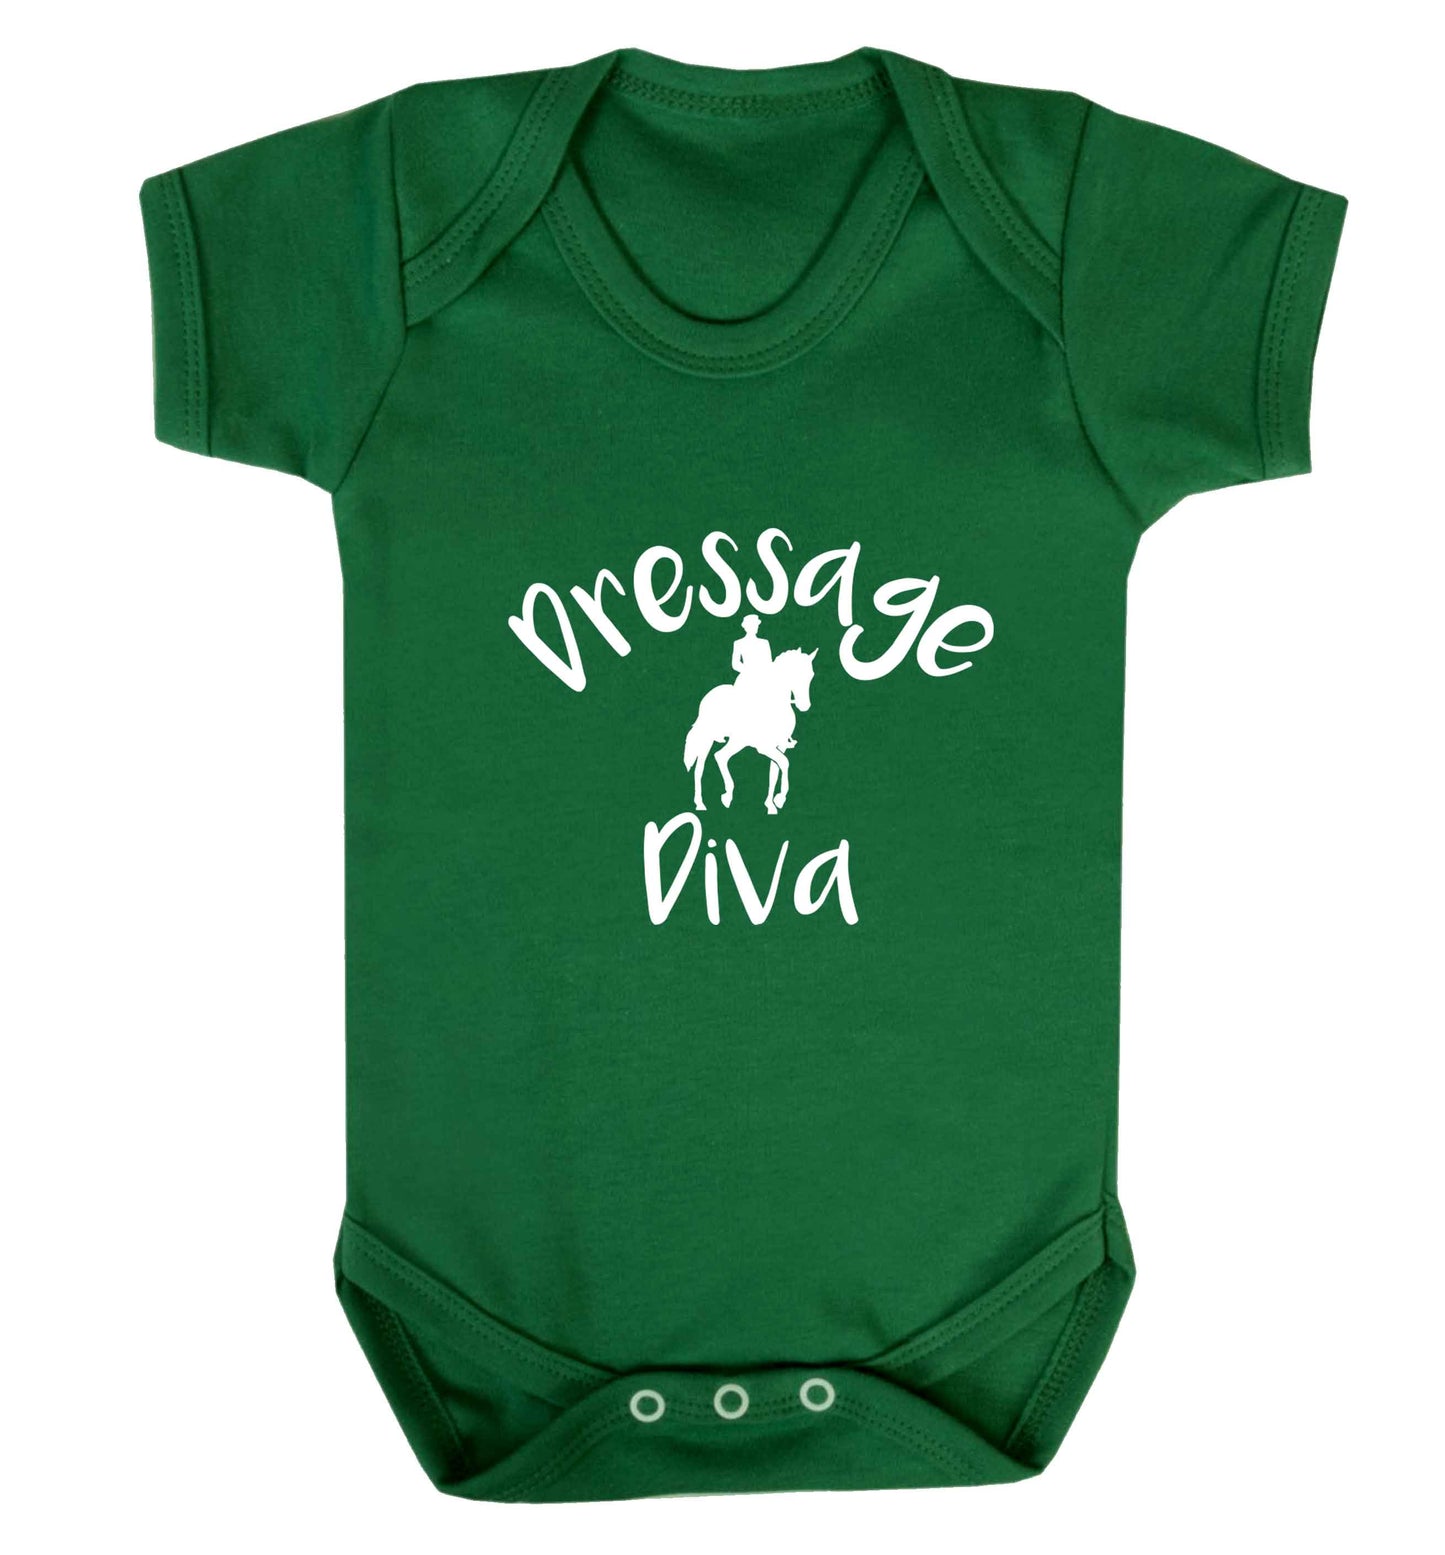 Dressage diva baby vest green 18-24 months